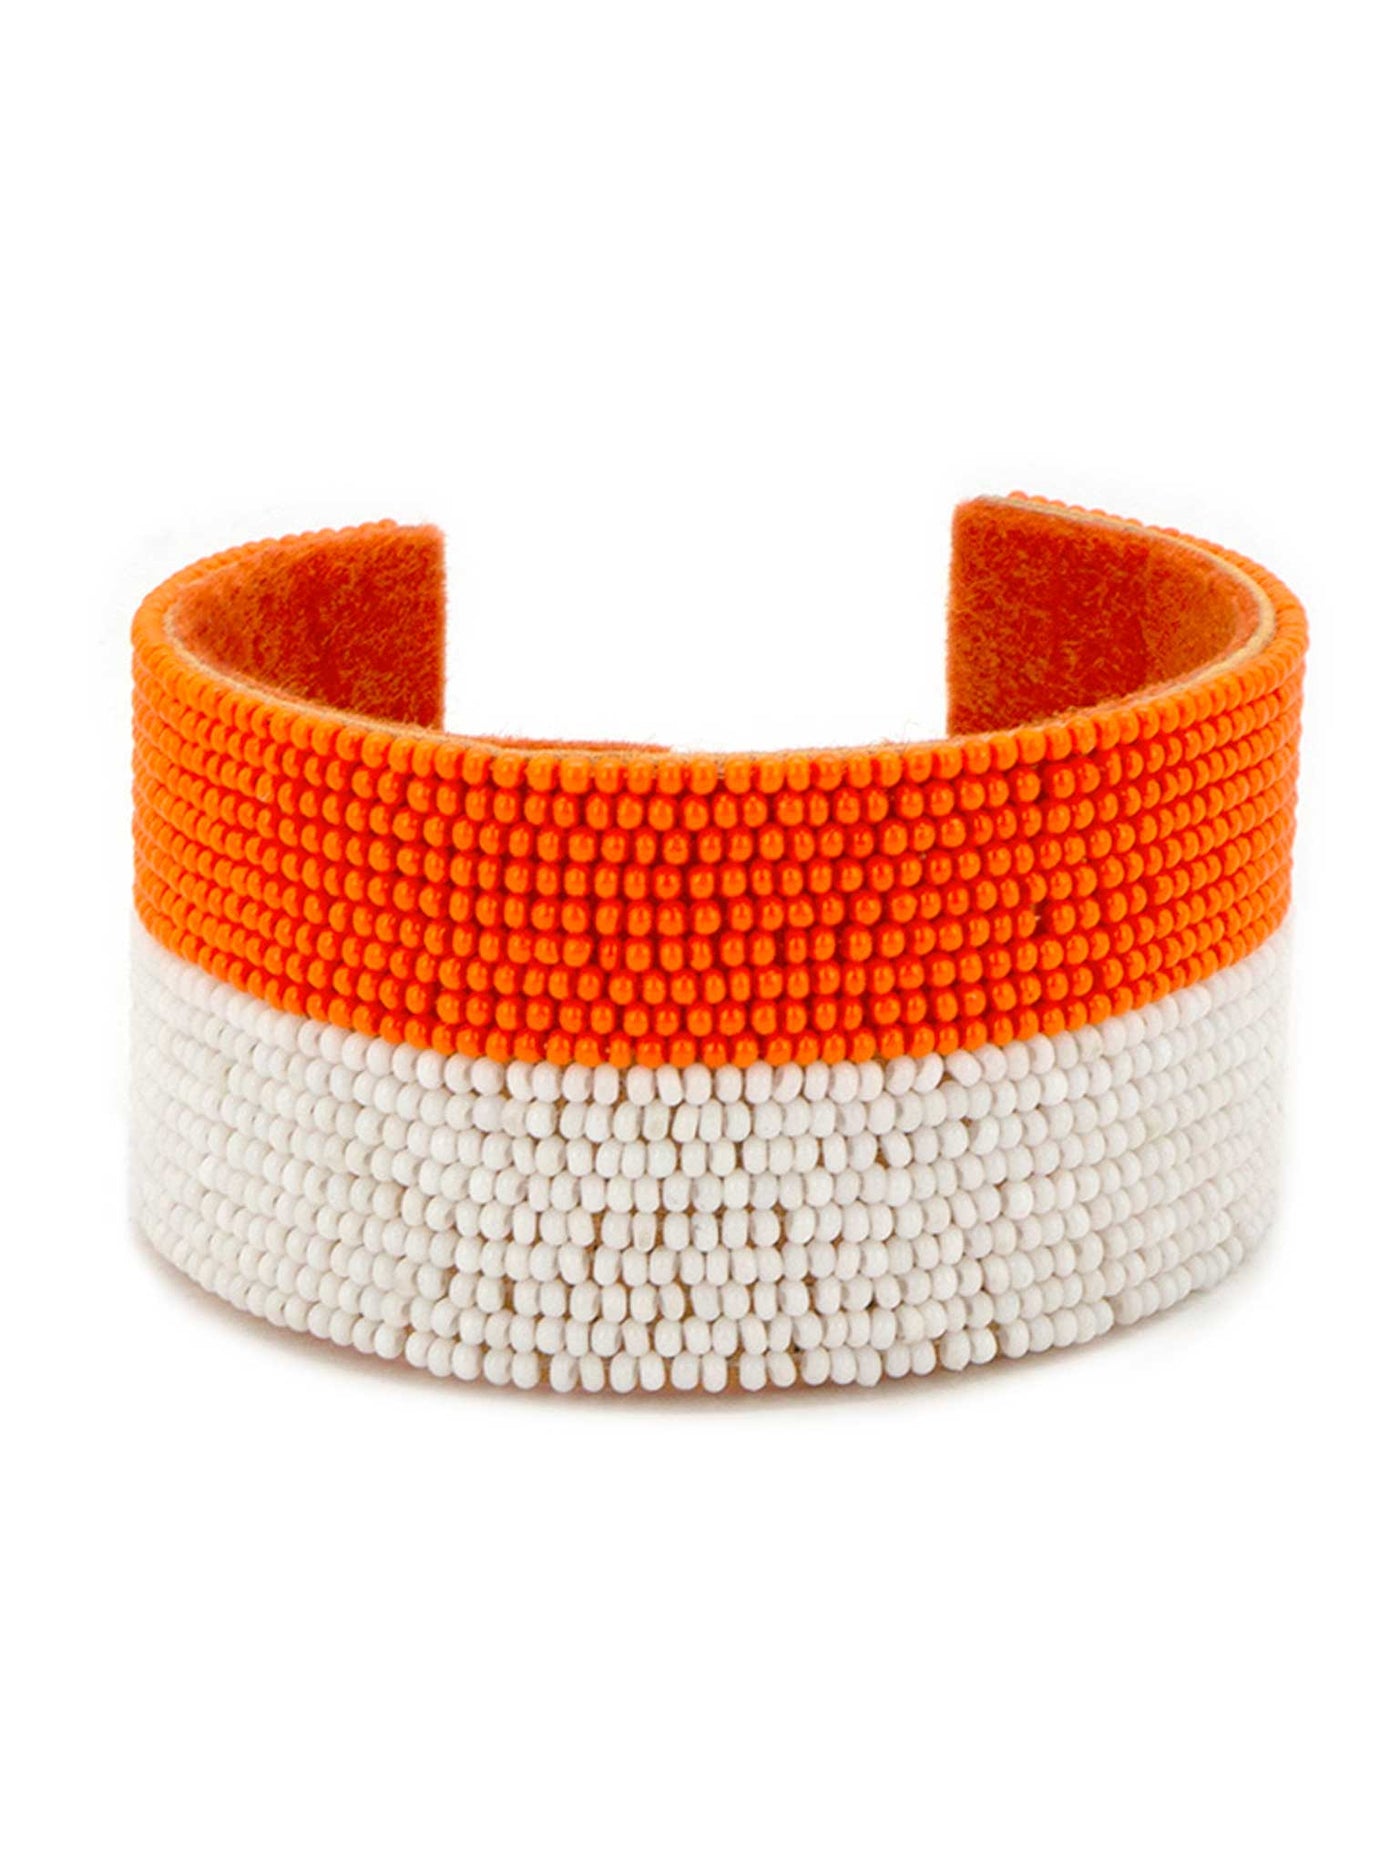 Orange and White Seed Bead Cuff Bracelet